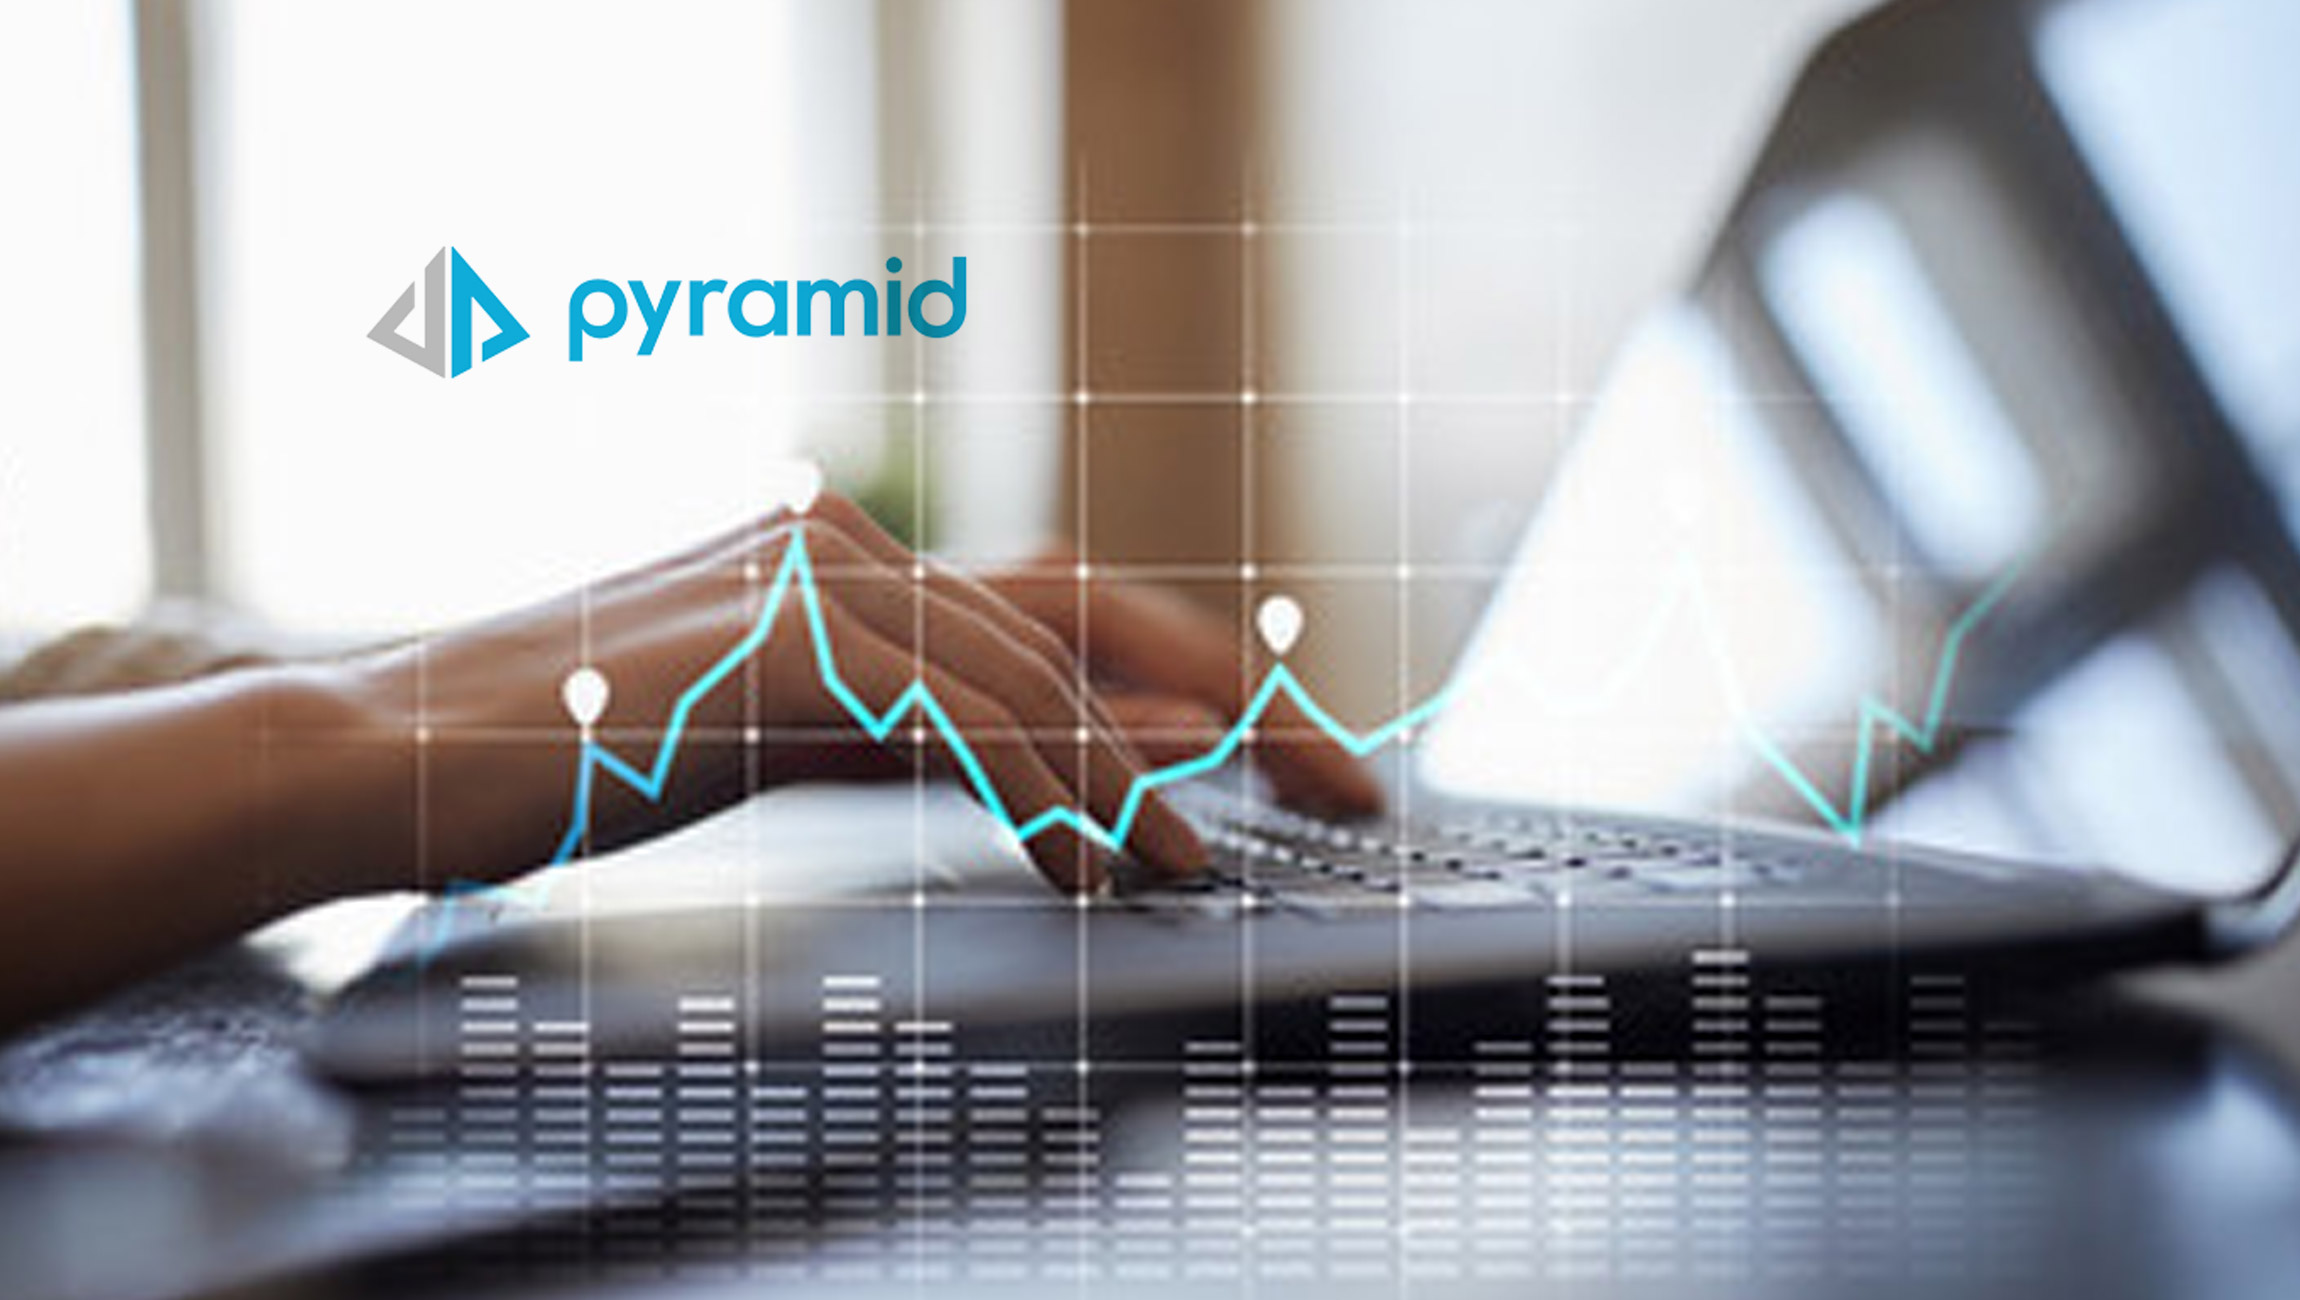 Dresner Advisory Services Study Names Pyramid Analytics a Top-Rated Analytical Platforms Vendor